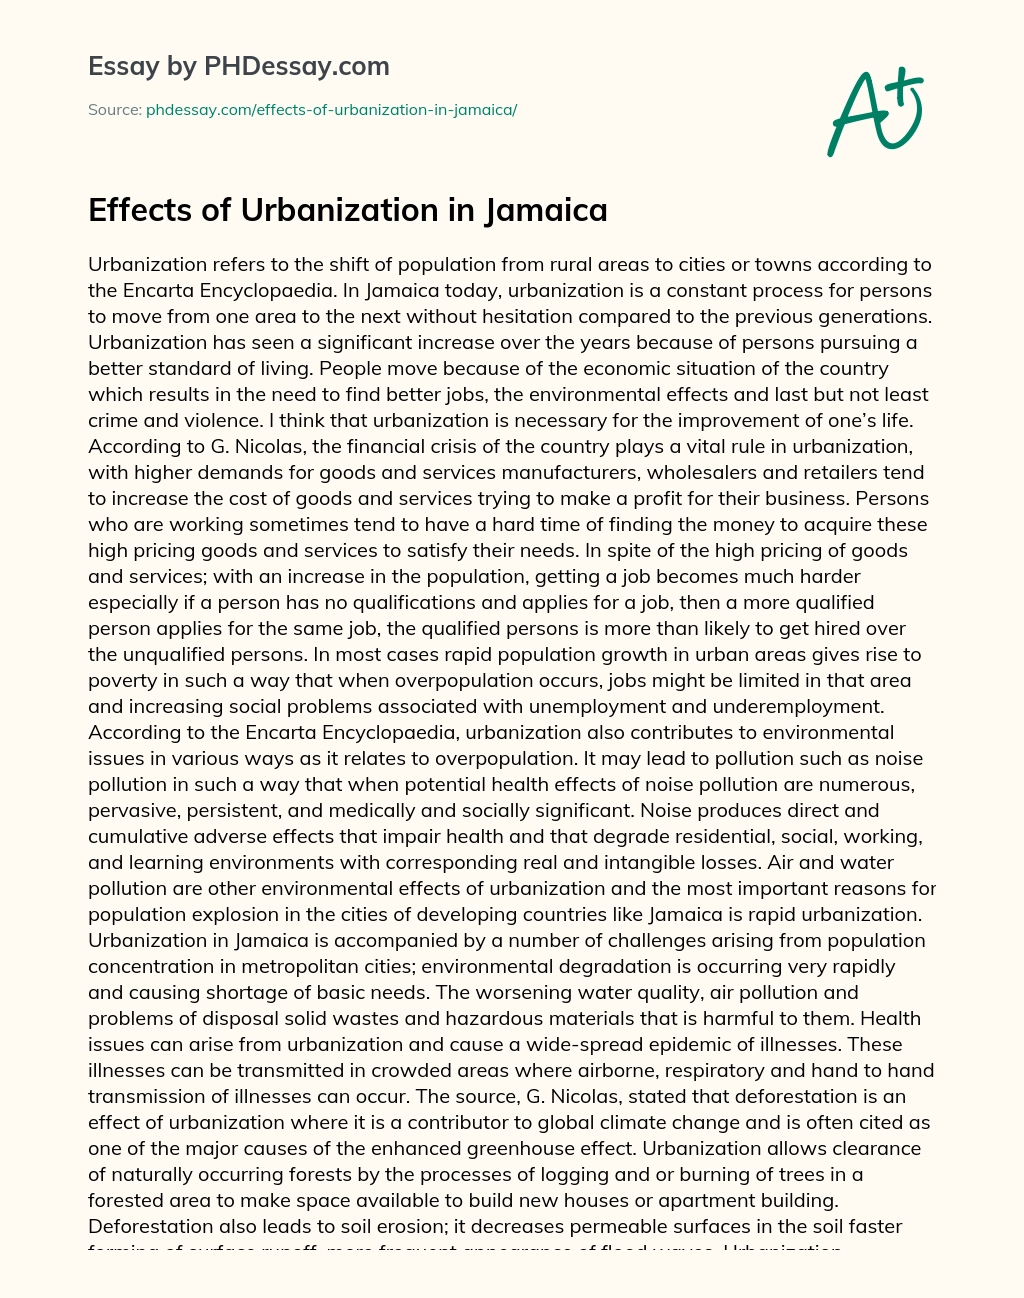 Effects of Urbanization in Jamaica essay